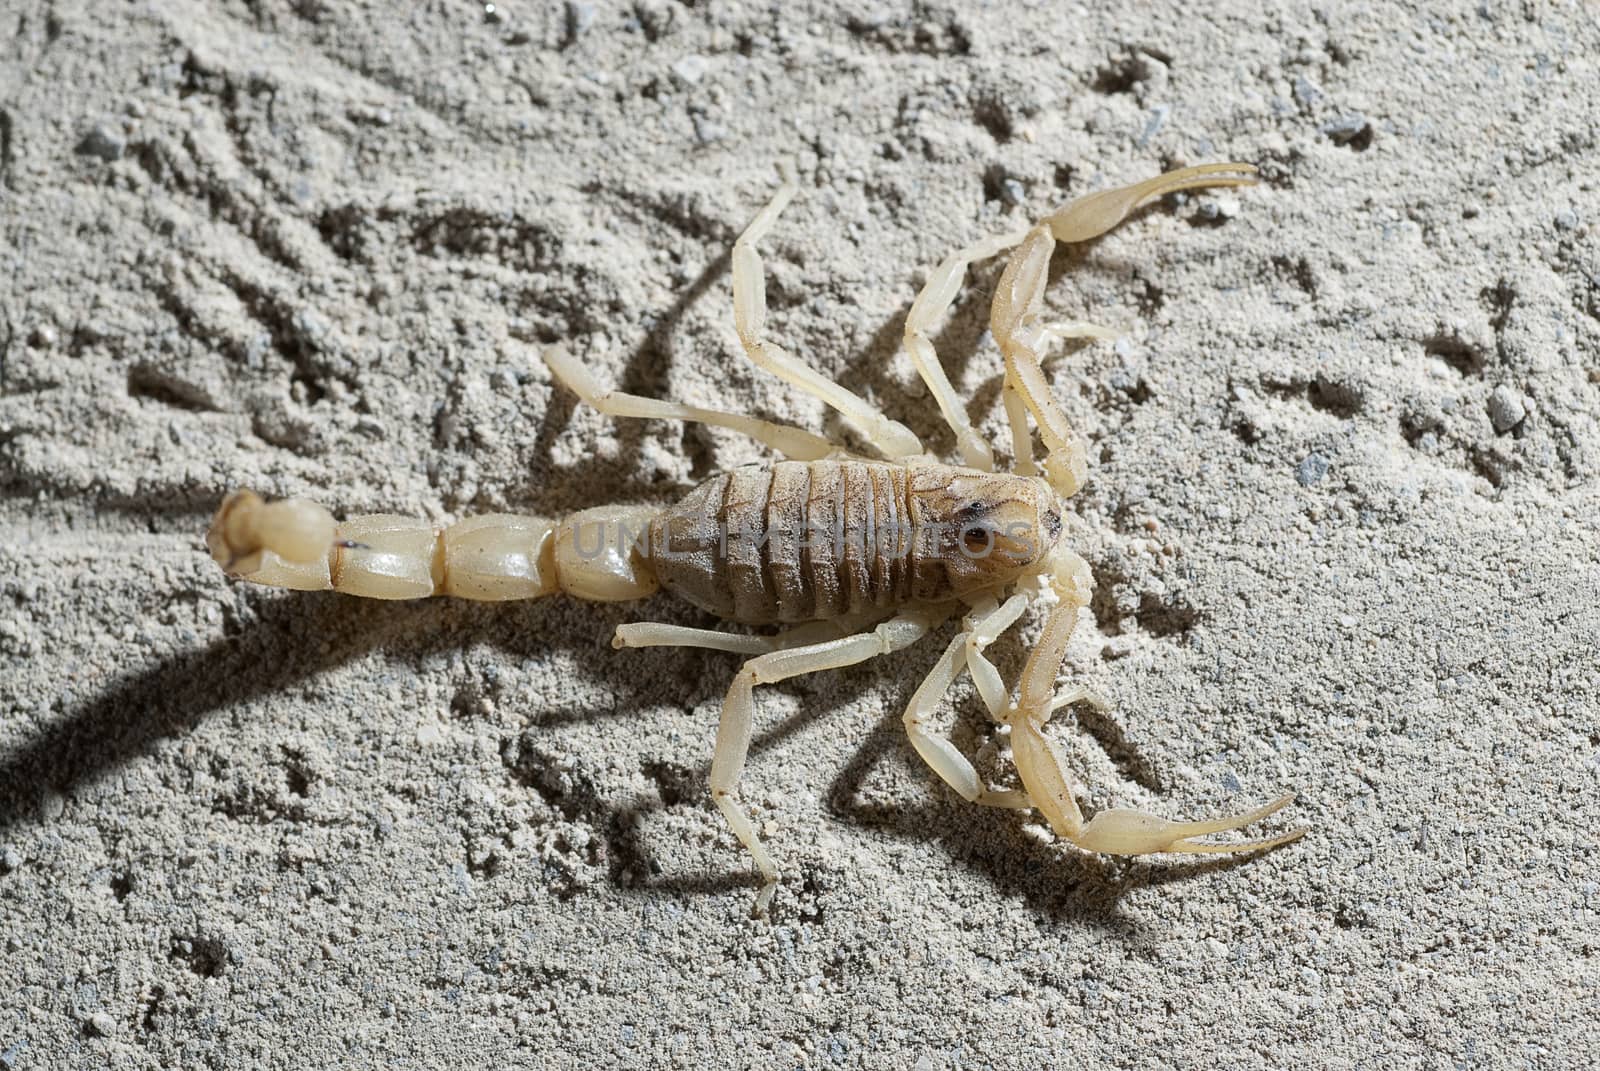 Scorpion, Buthus occitanus, yellow scorpion, sting by jalonsohu@gmail.com